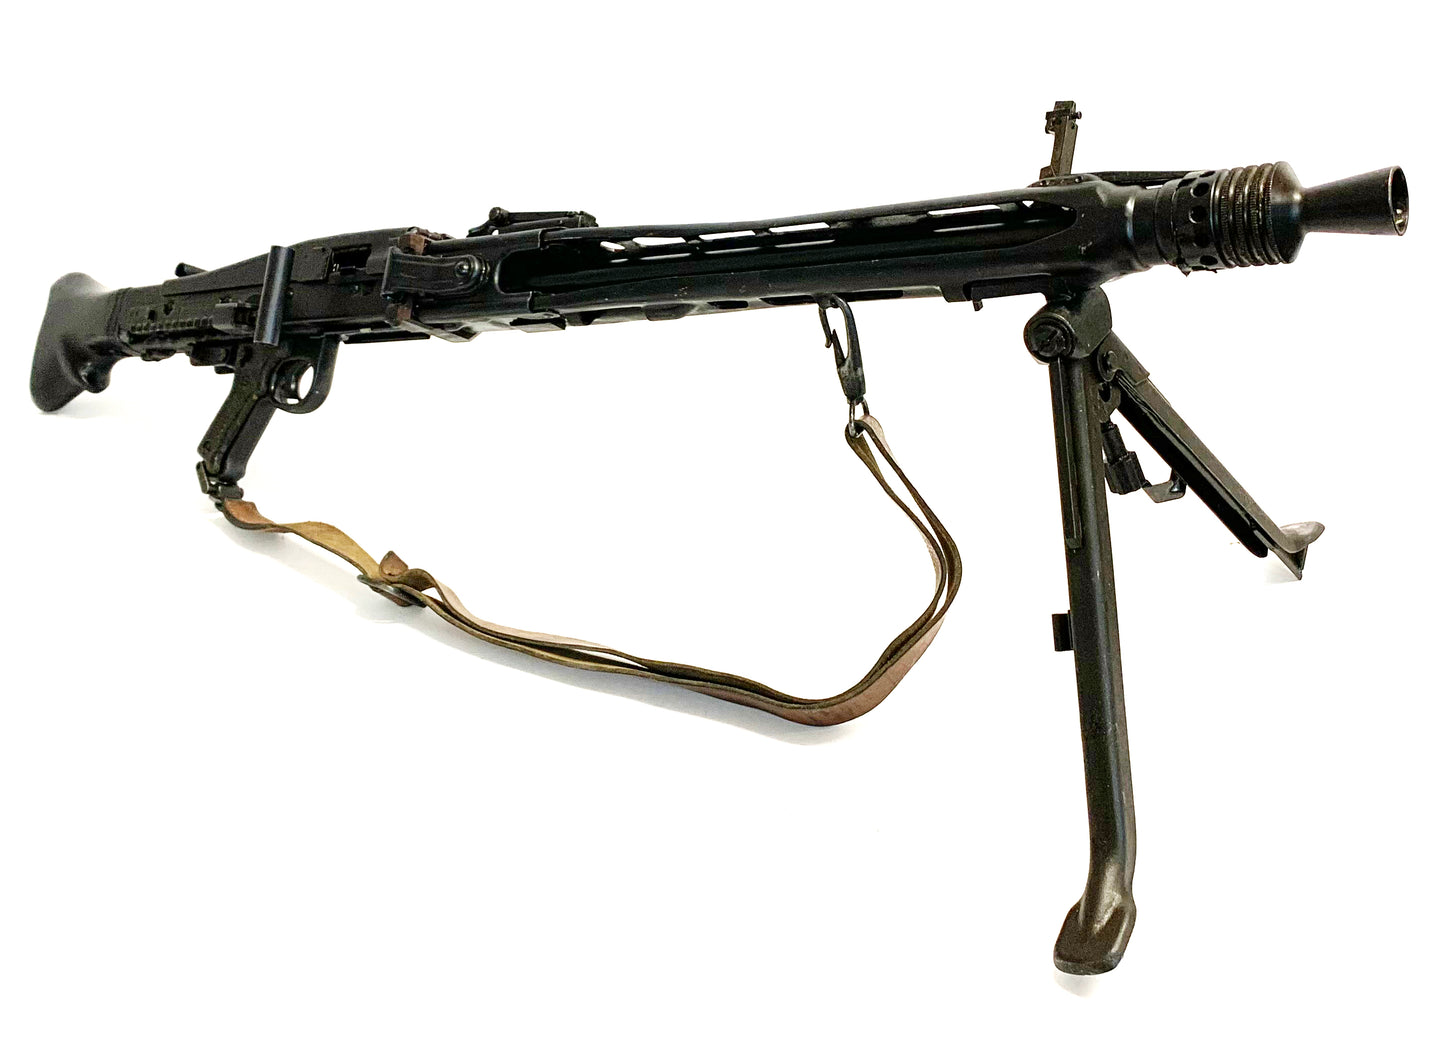 Deactivated MG53 General Purpose Machine Gun with FREE original Sling.